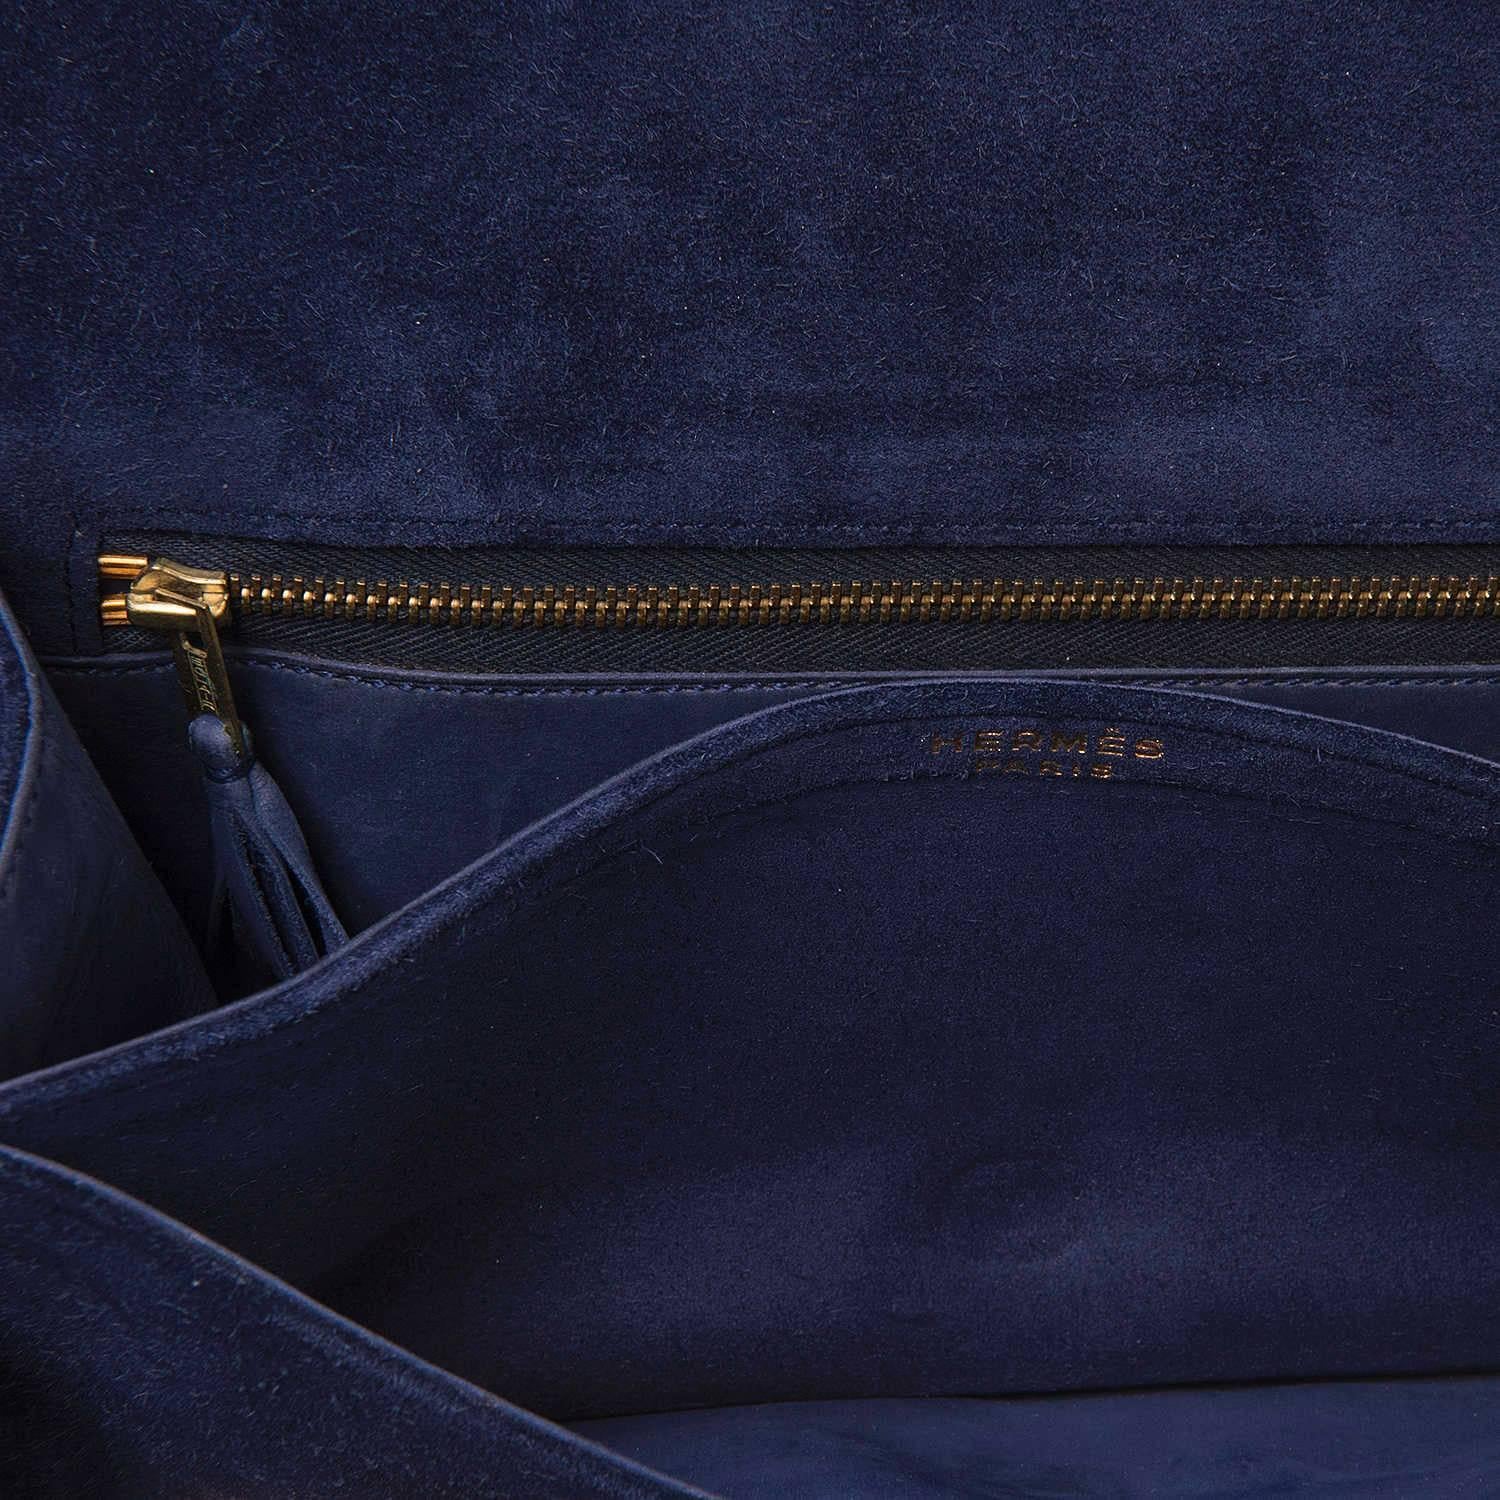 VERY RARE Vintage Hermes Royal Blue Suede Clutch Bag with18 carat Gold Hardware 1